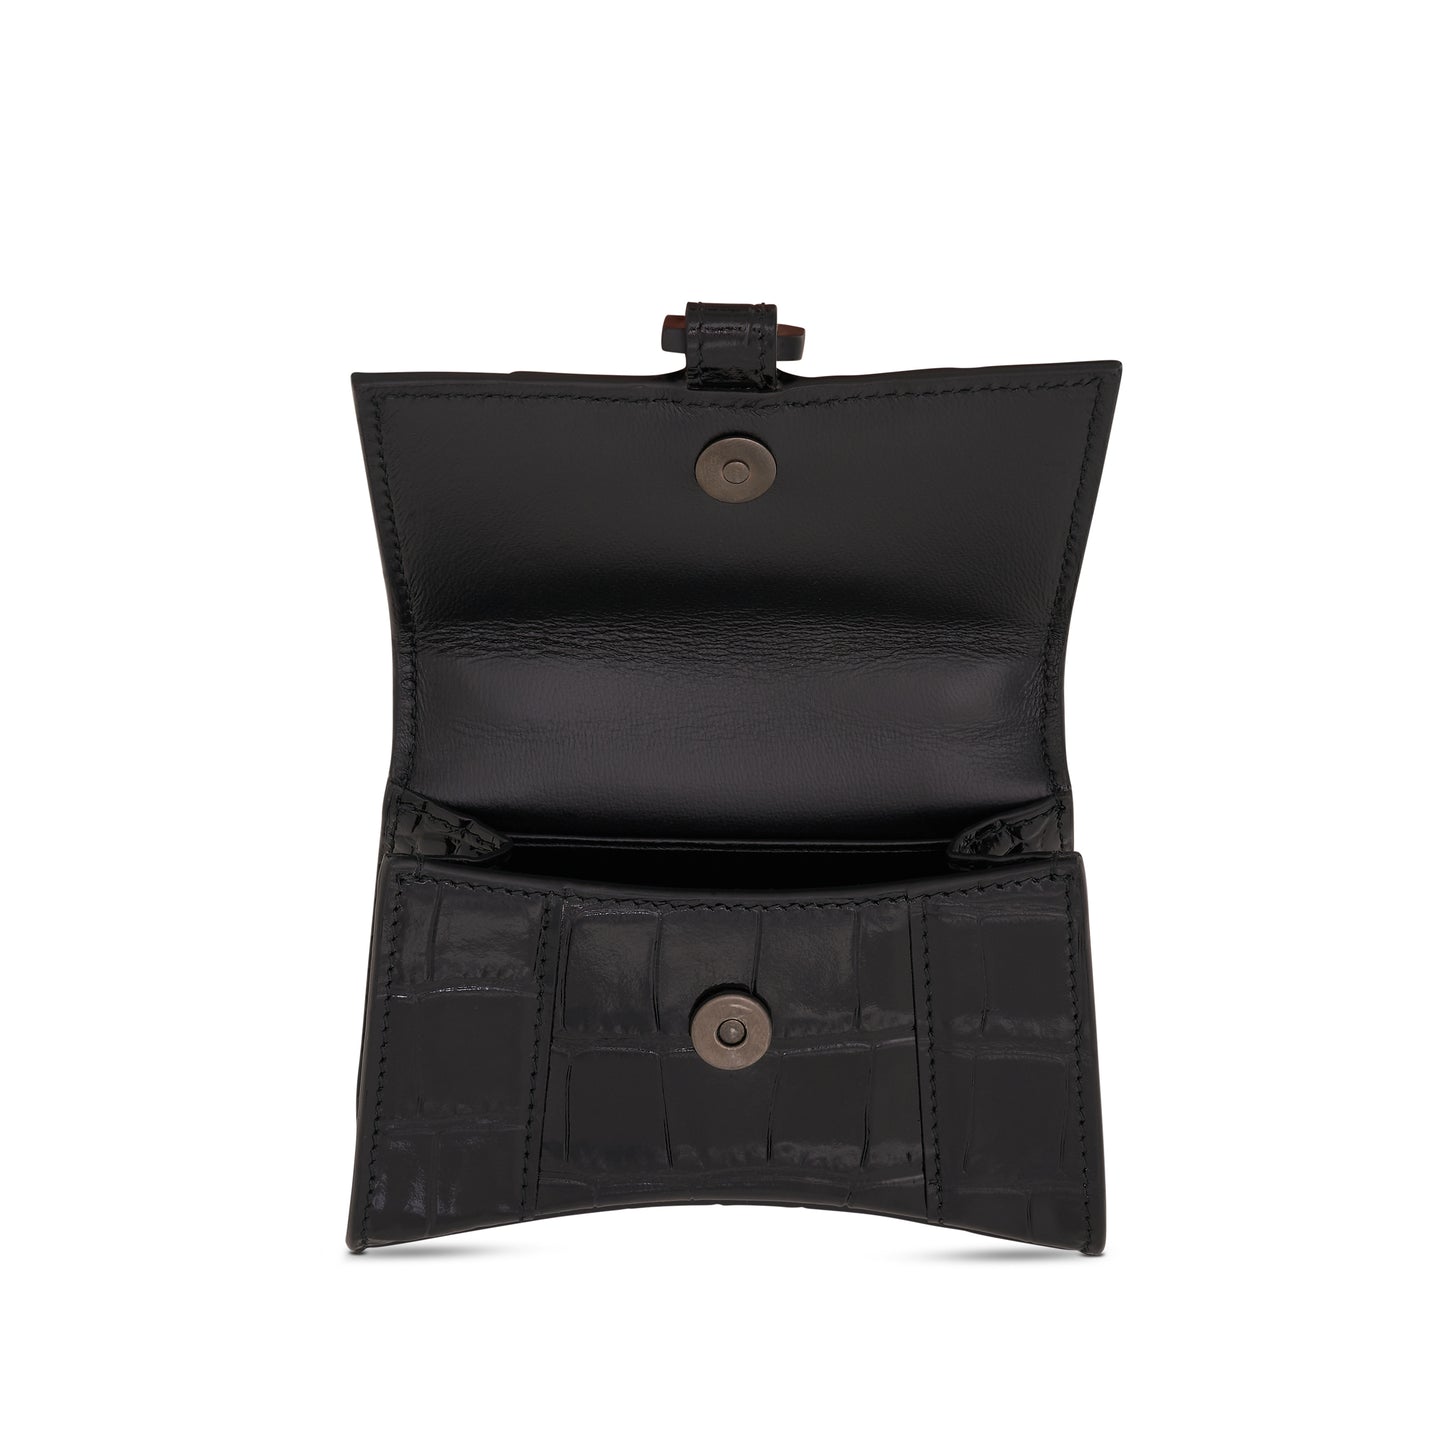 Hourglass Mini Croco Embossed Chain Bag in Black